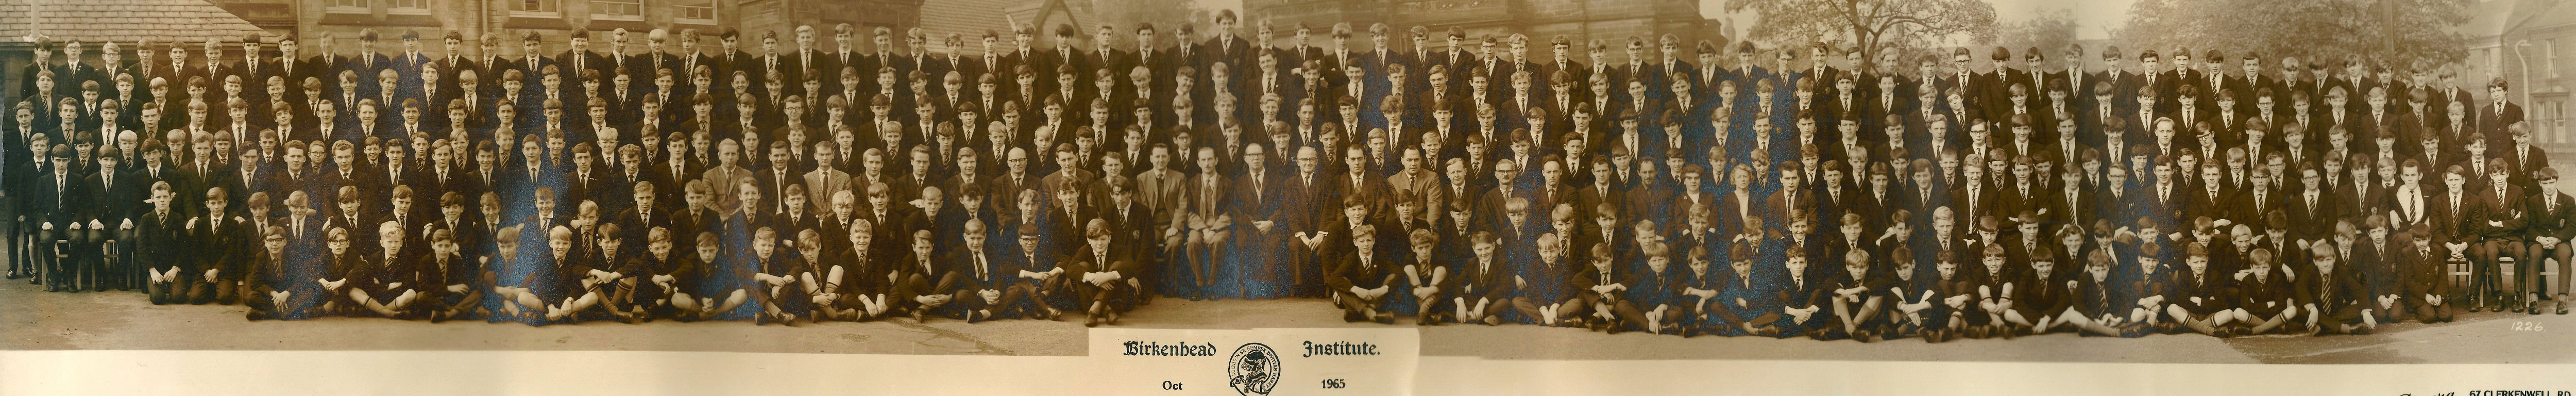 Whole School Photograph 1965